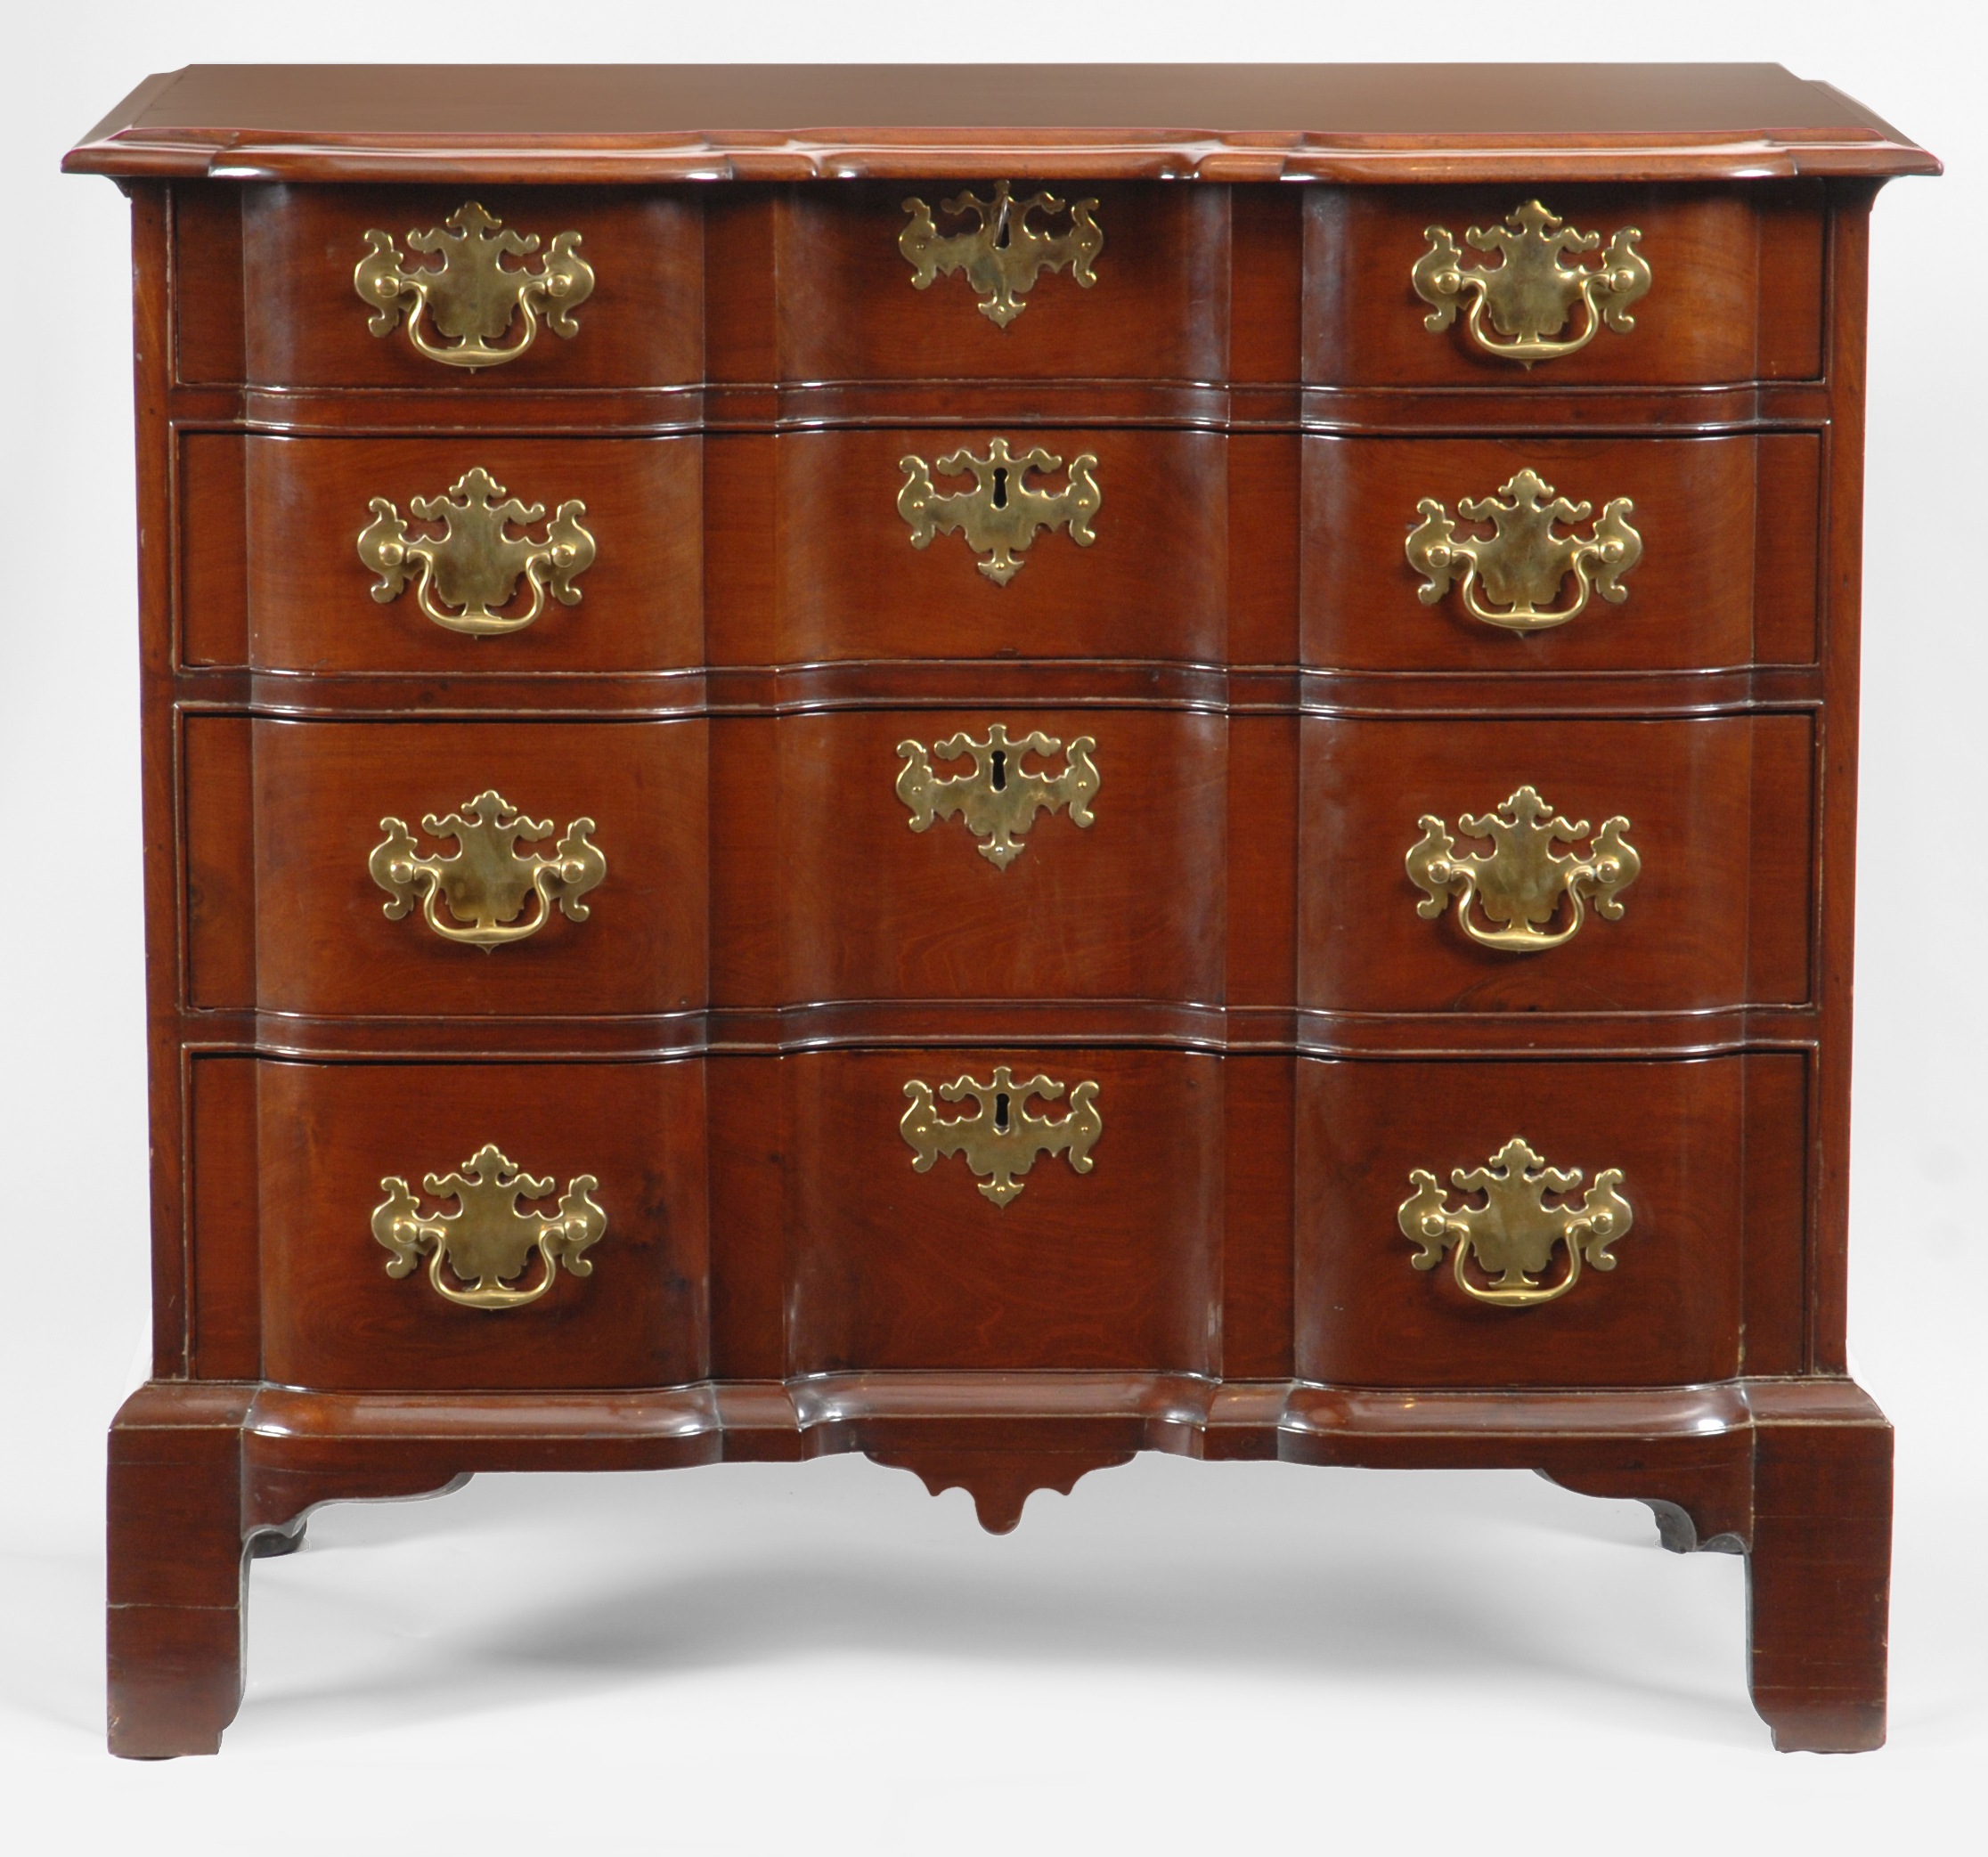 A fine Chippendale mahogany block front chest of drawers, Boston Massachusetts origin, circa 1770.